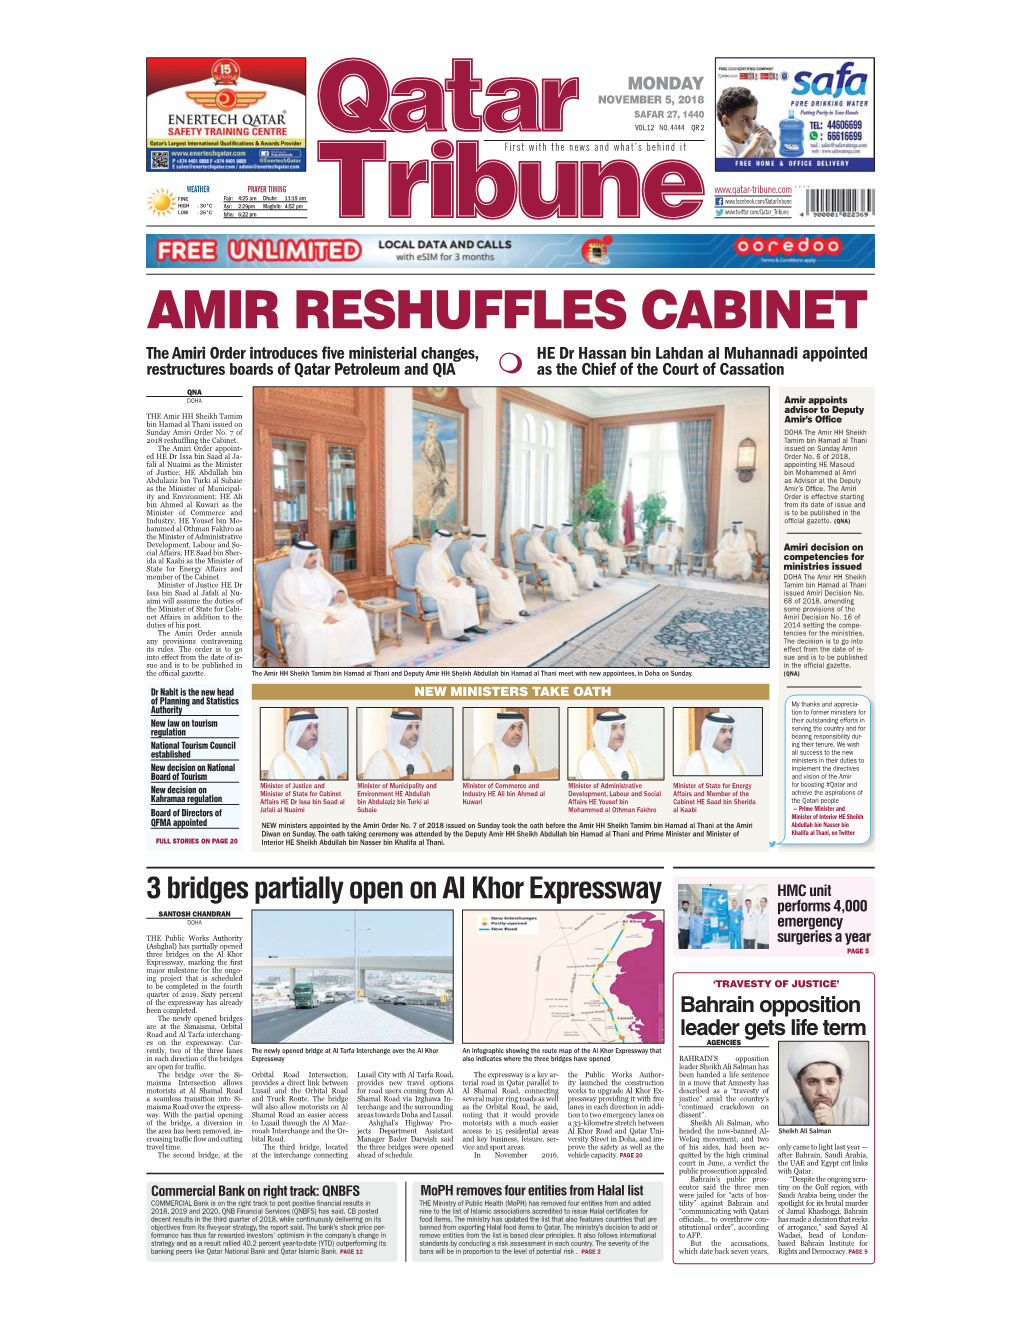 Amir Reshuffles Cabinet